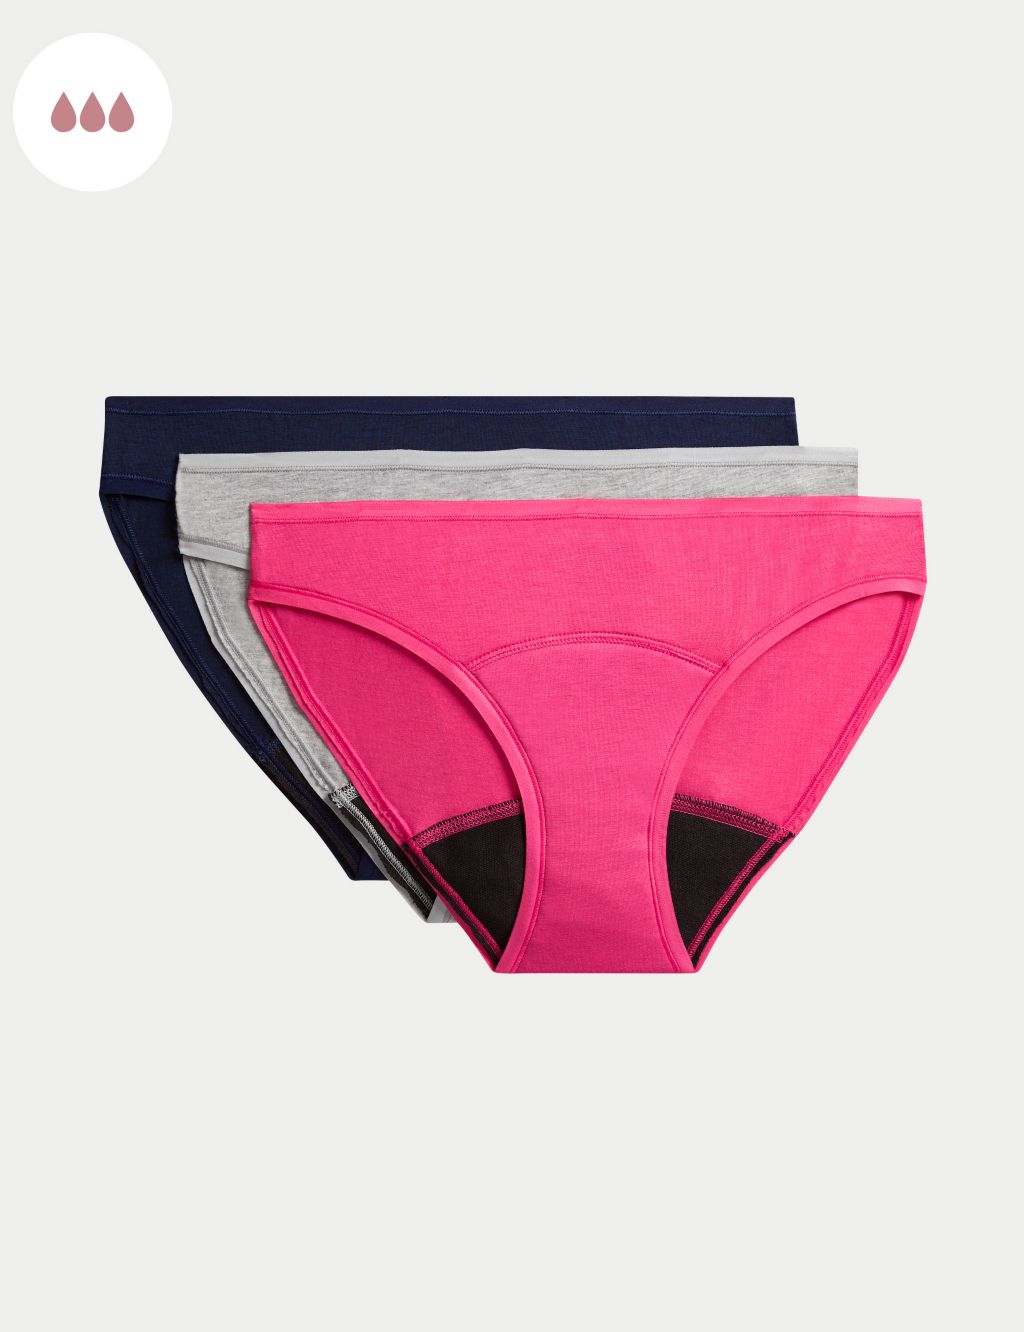 zuwimk Womens Panties ,Womenâ€™s Seamless Hipster Underwear No Show Panties  Soft Stretch Bikini Underwears Pink,S